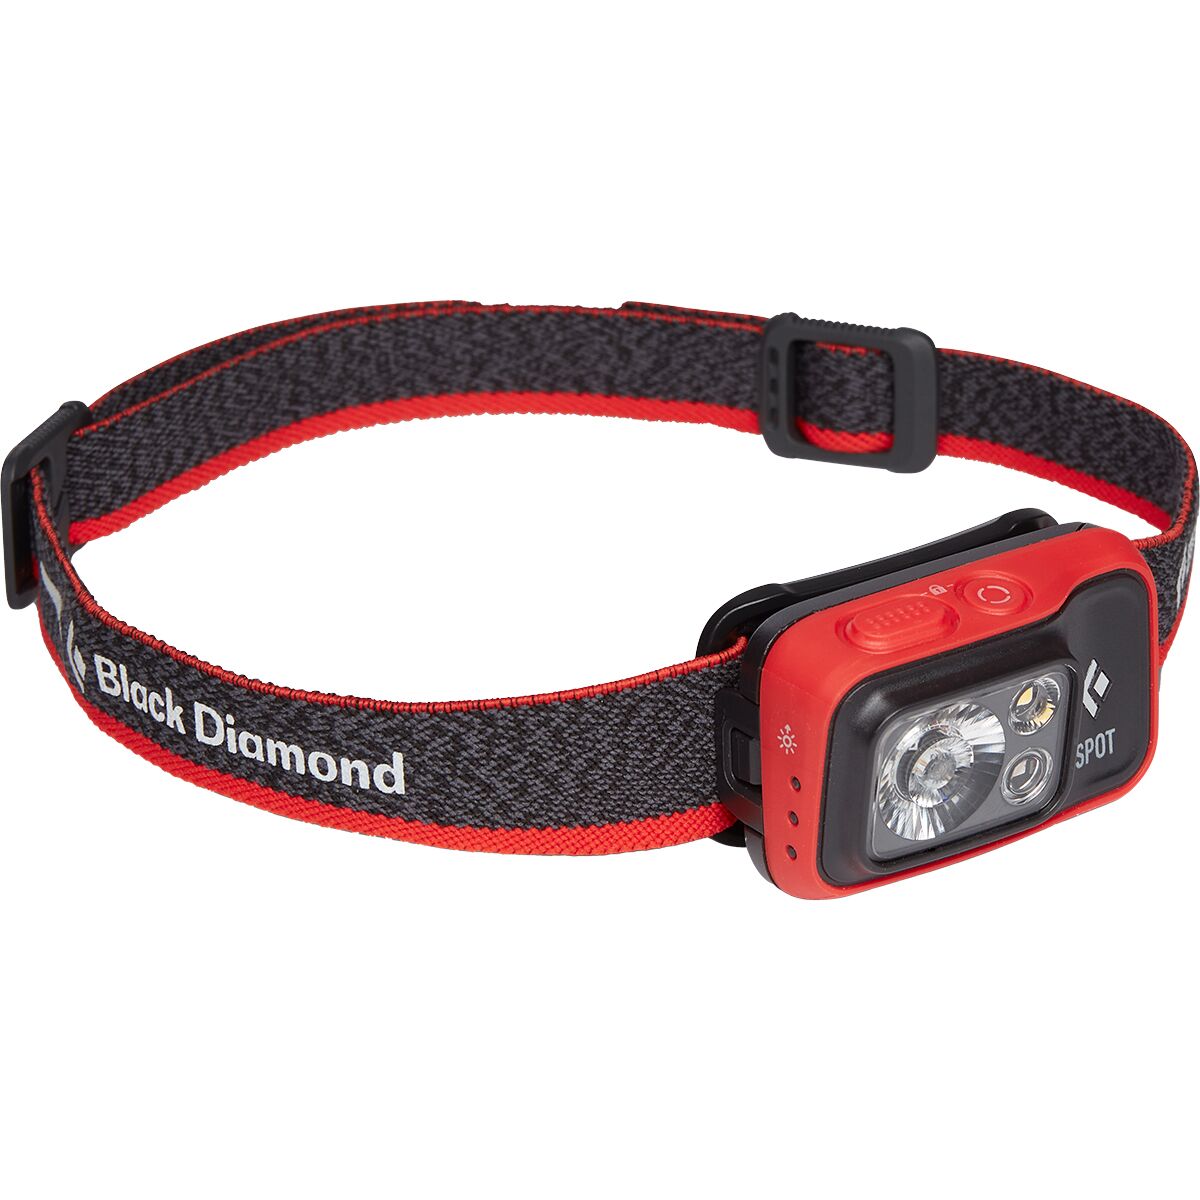  Black Diamond Spot 400 Headlamp - Hike & Camp